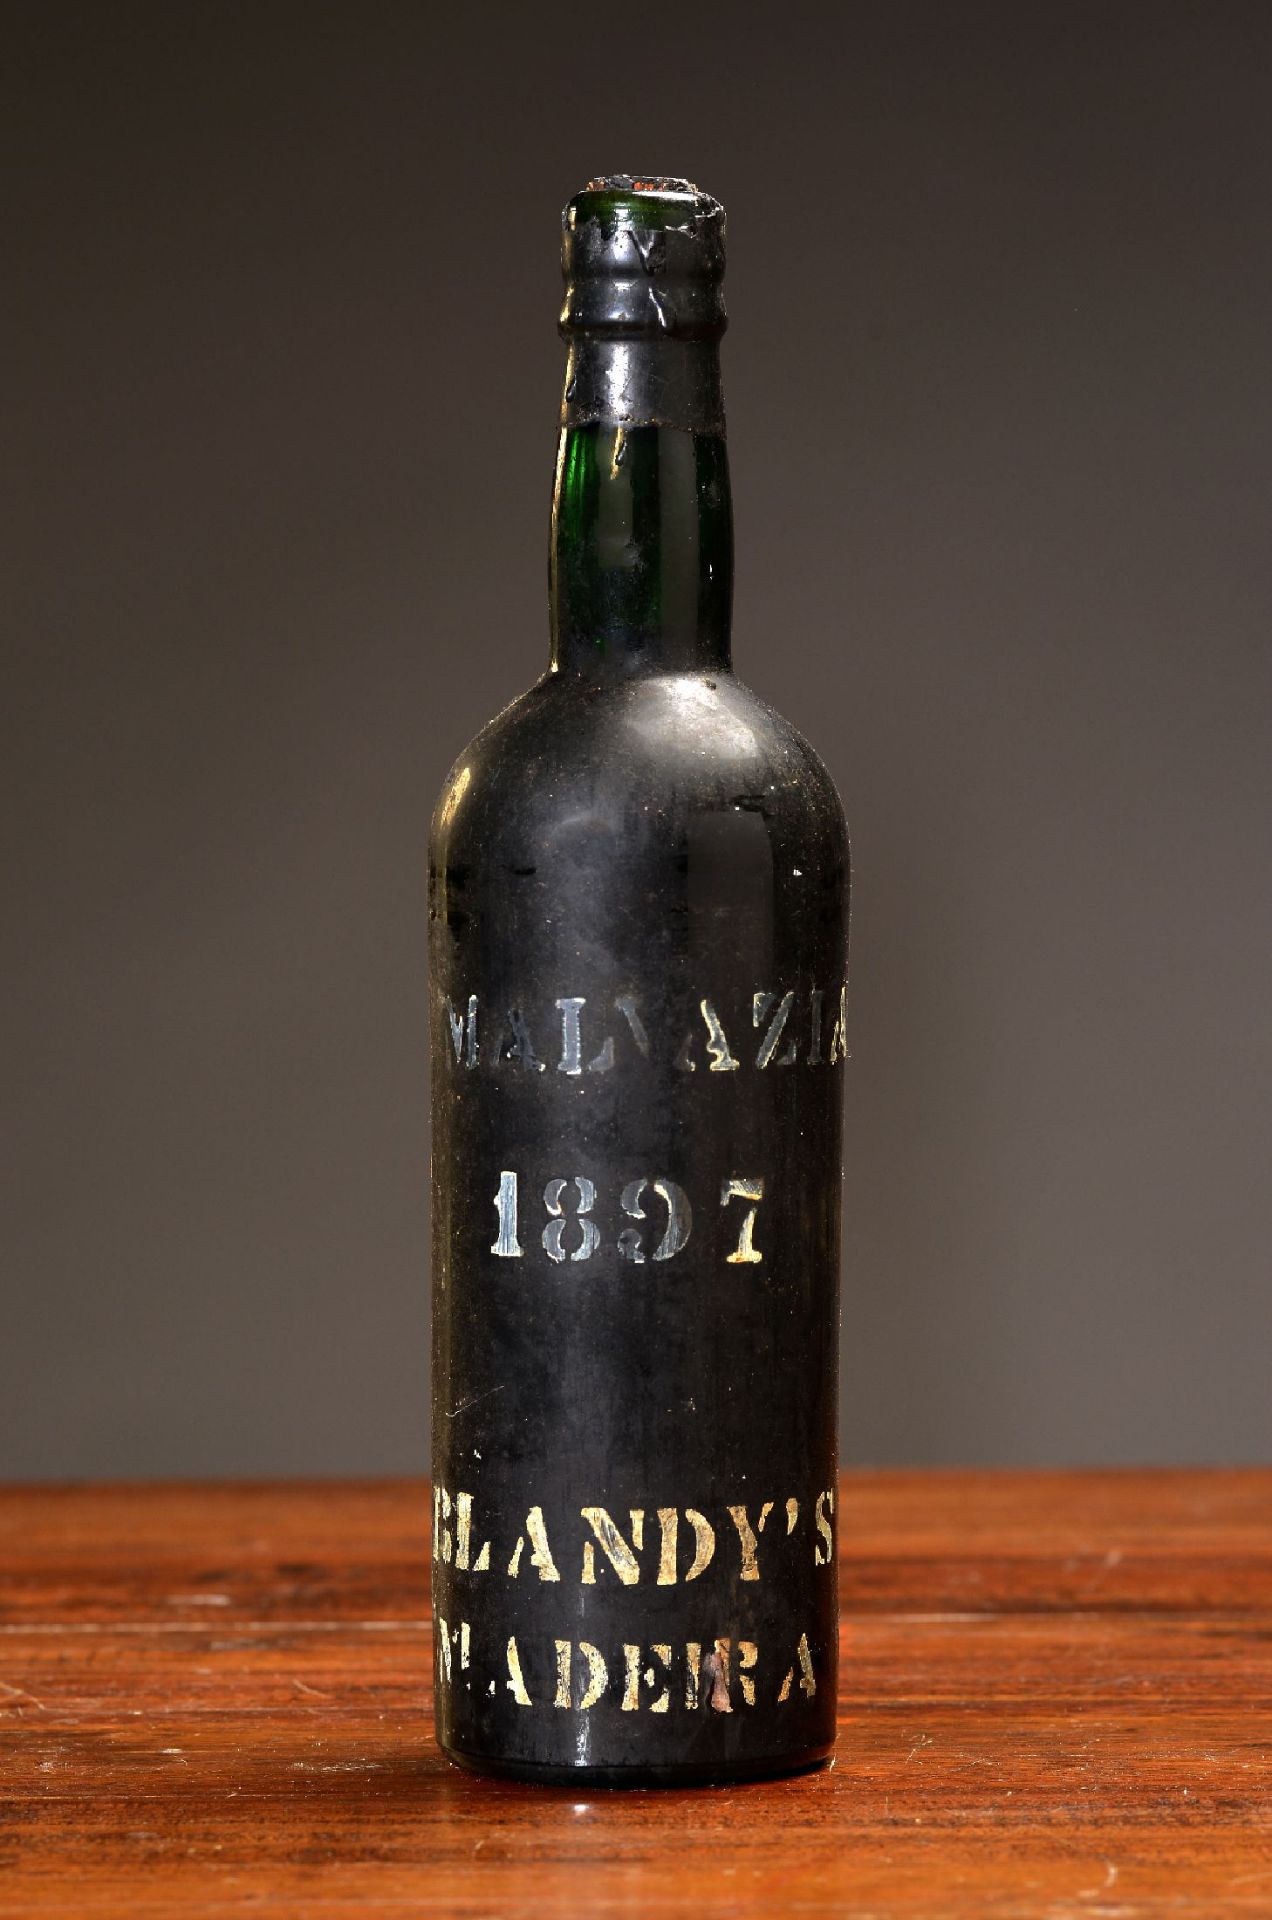 1 Flasche 1897 Porto Blandy's,  Madeira, ca. 75cl,